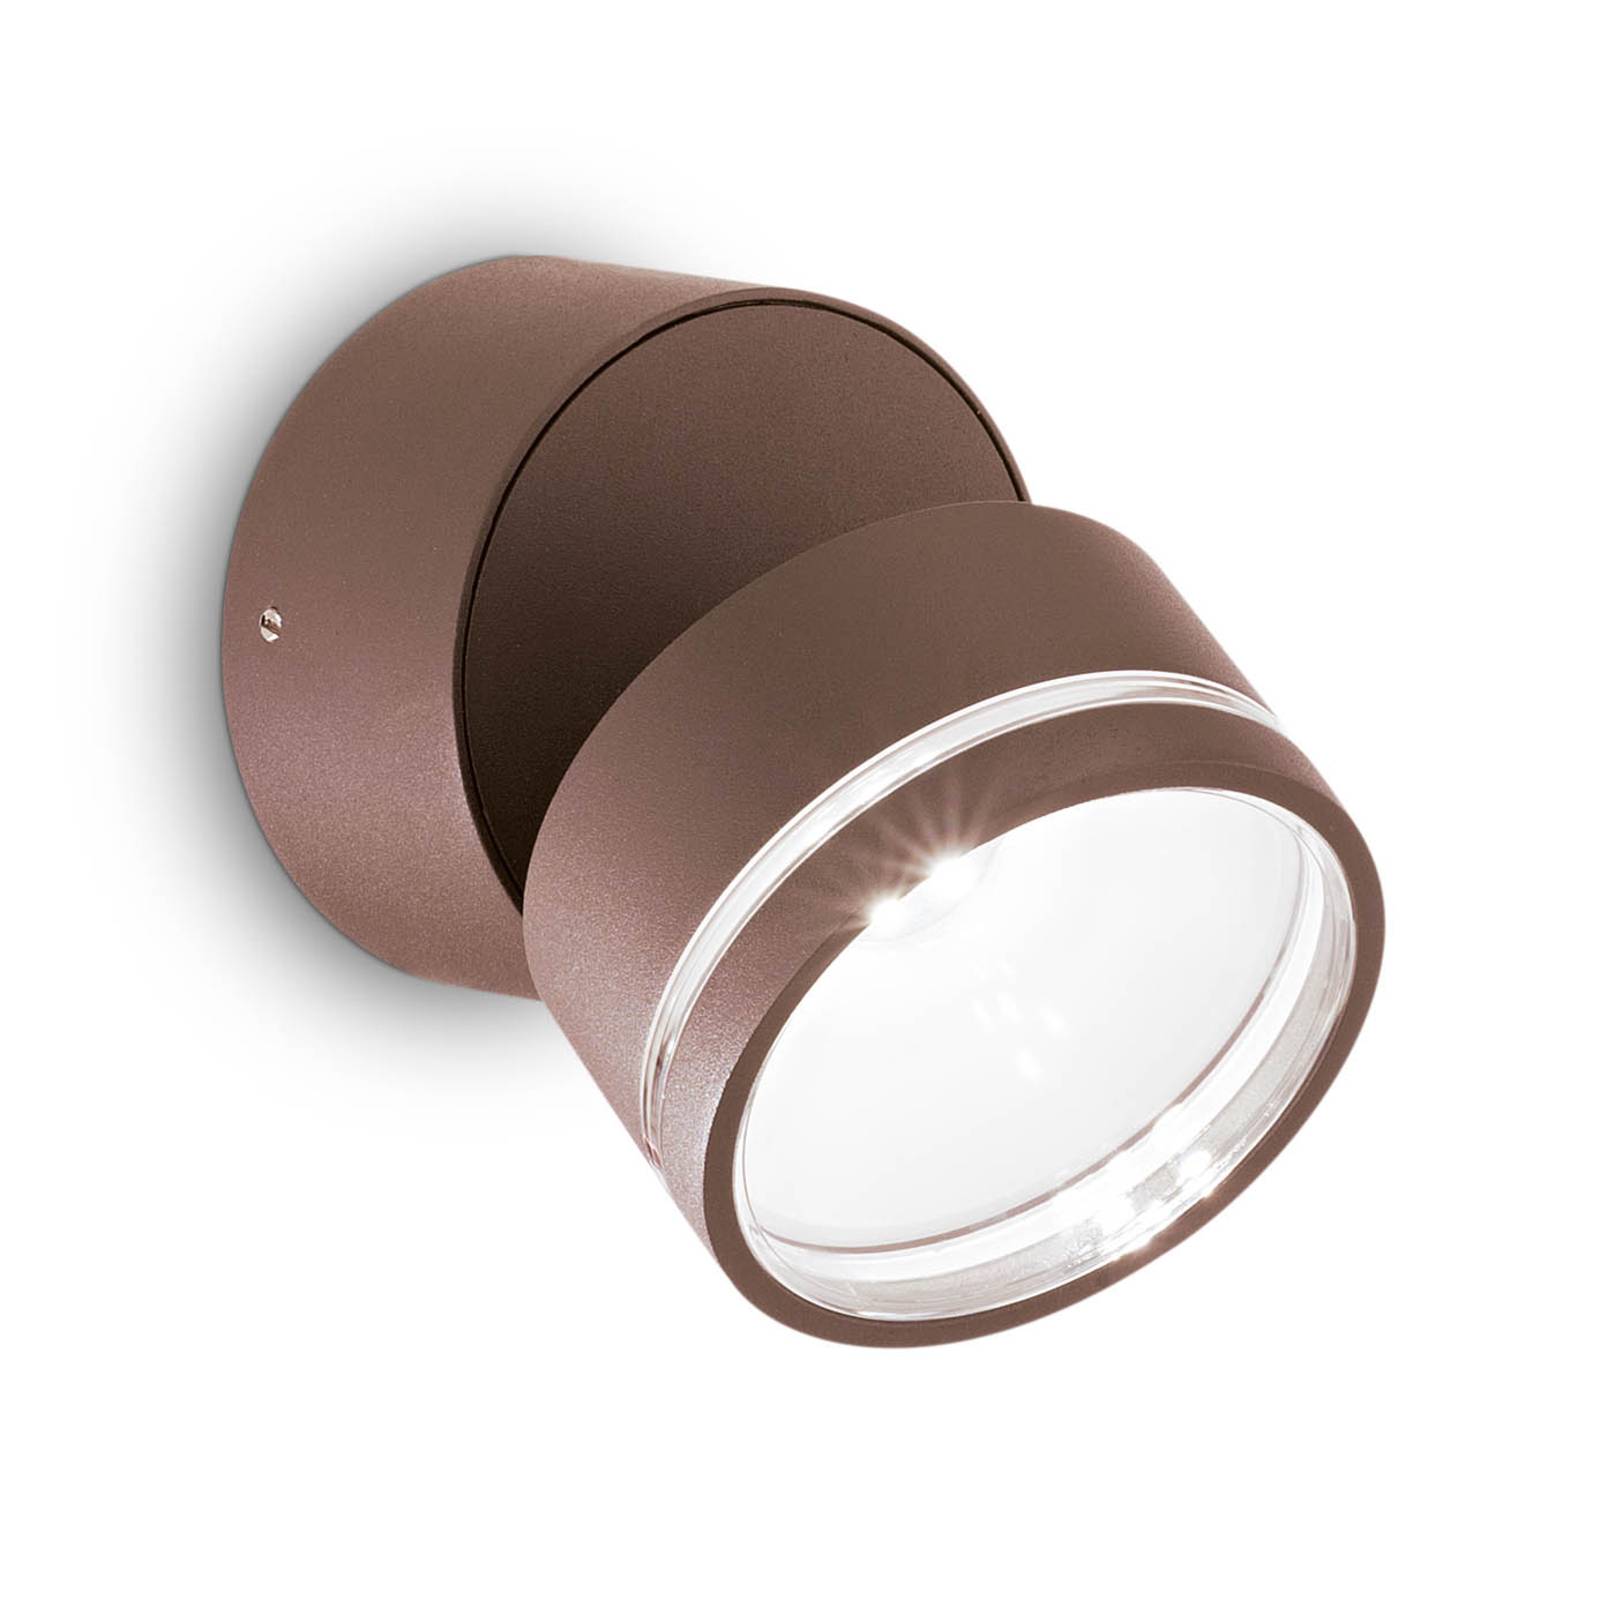 Ideallux Ideal Lux Omega Round LED-vägglampa 4 000 K kaffe